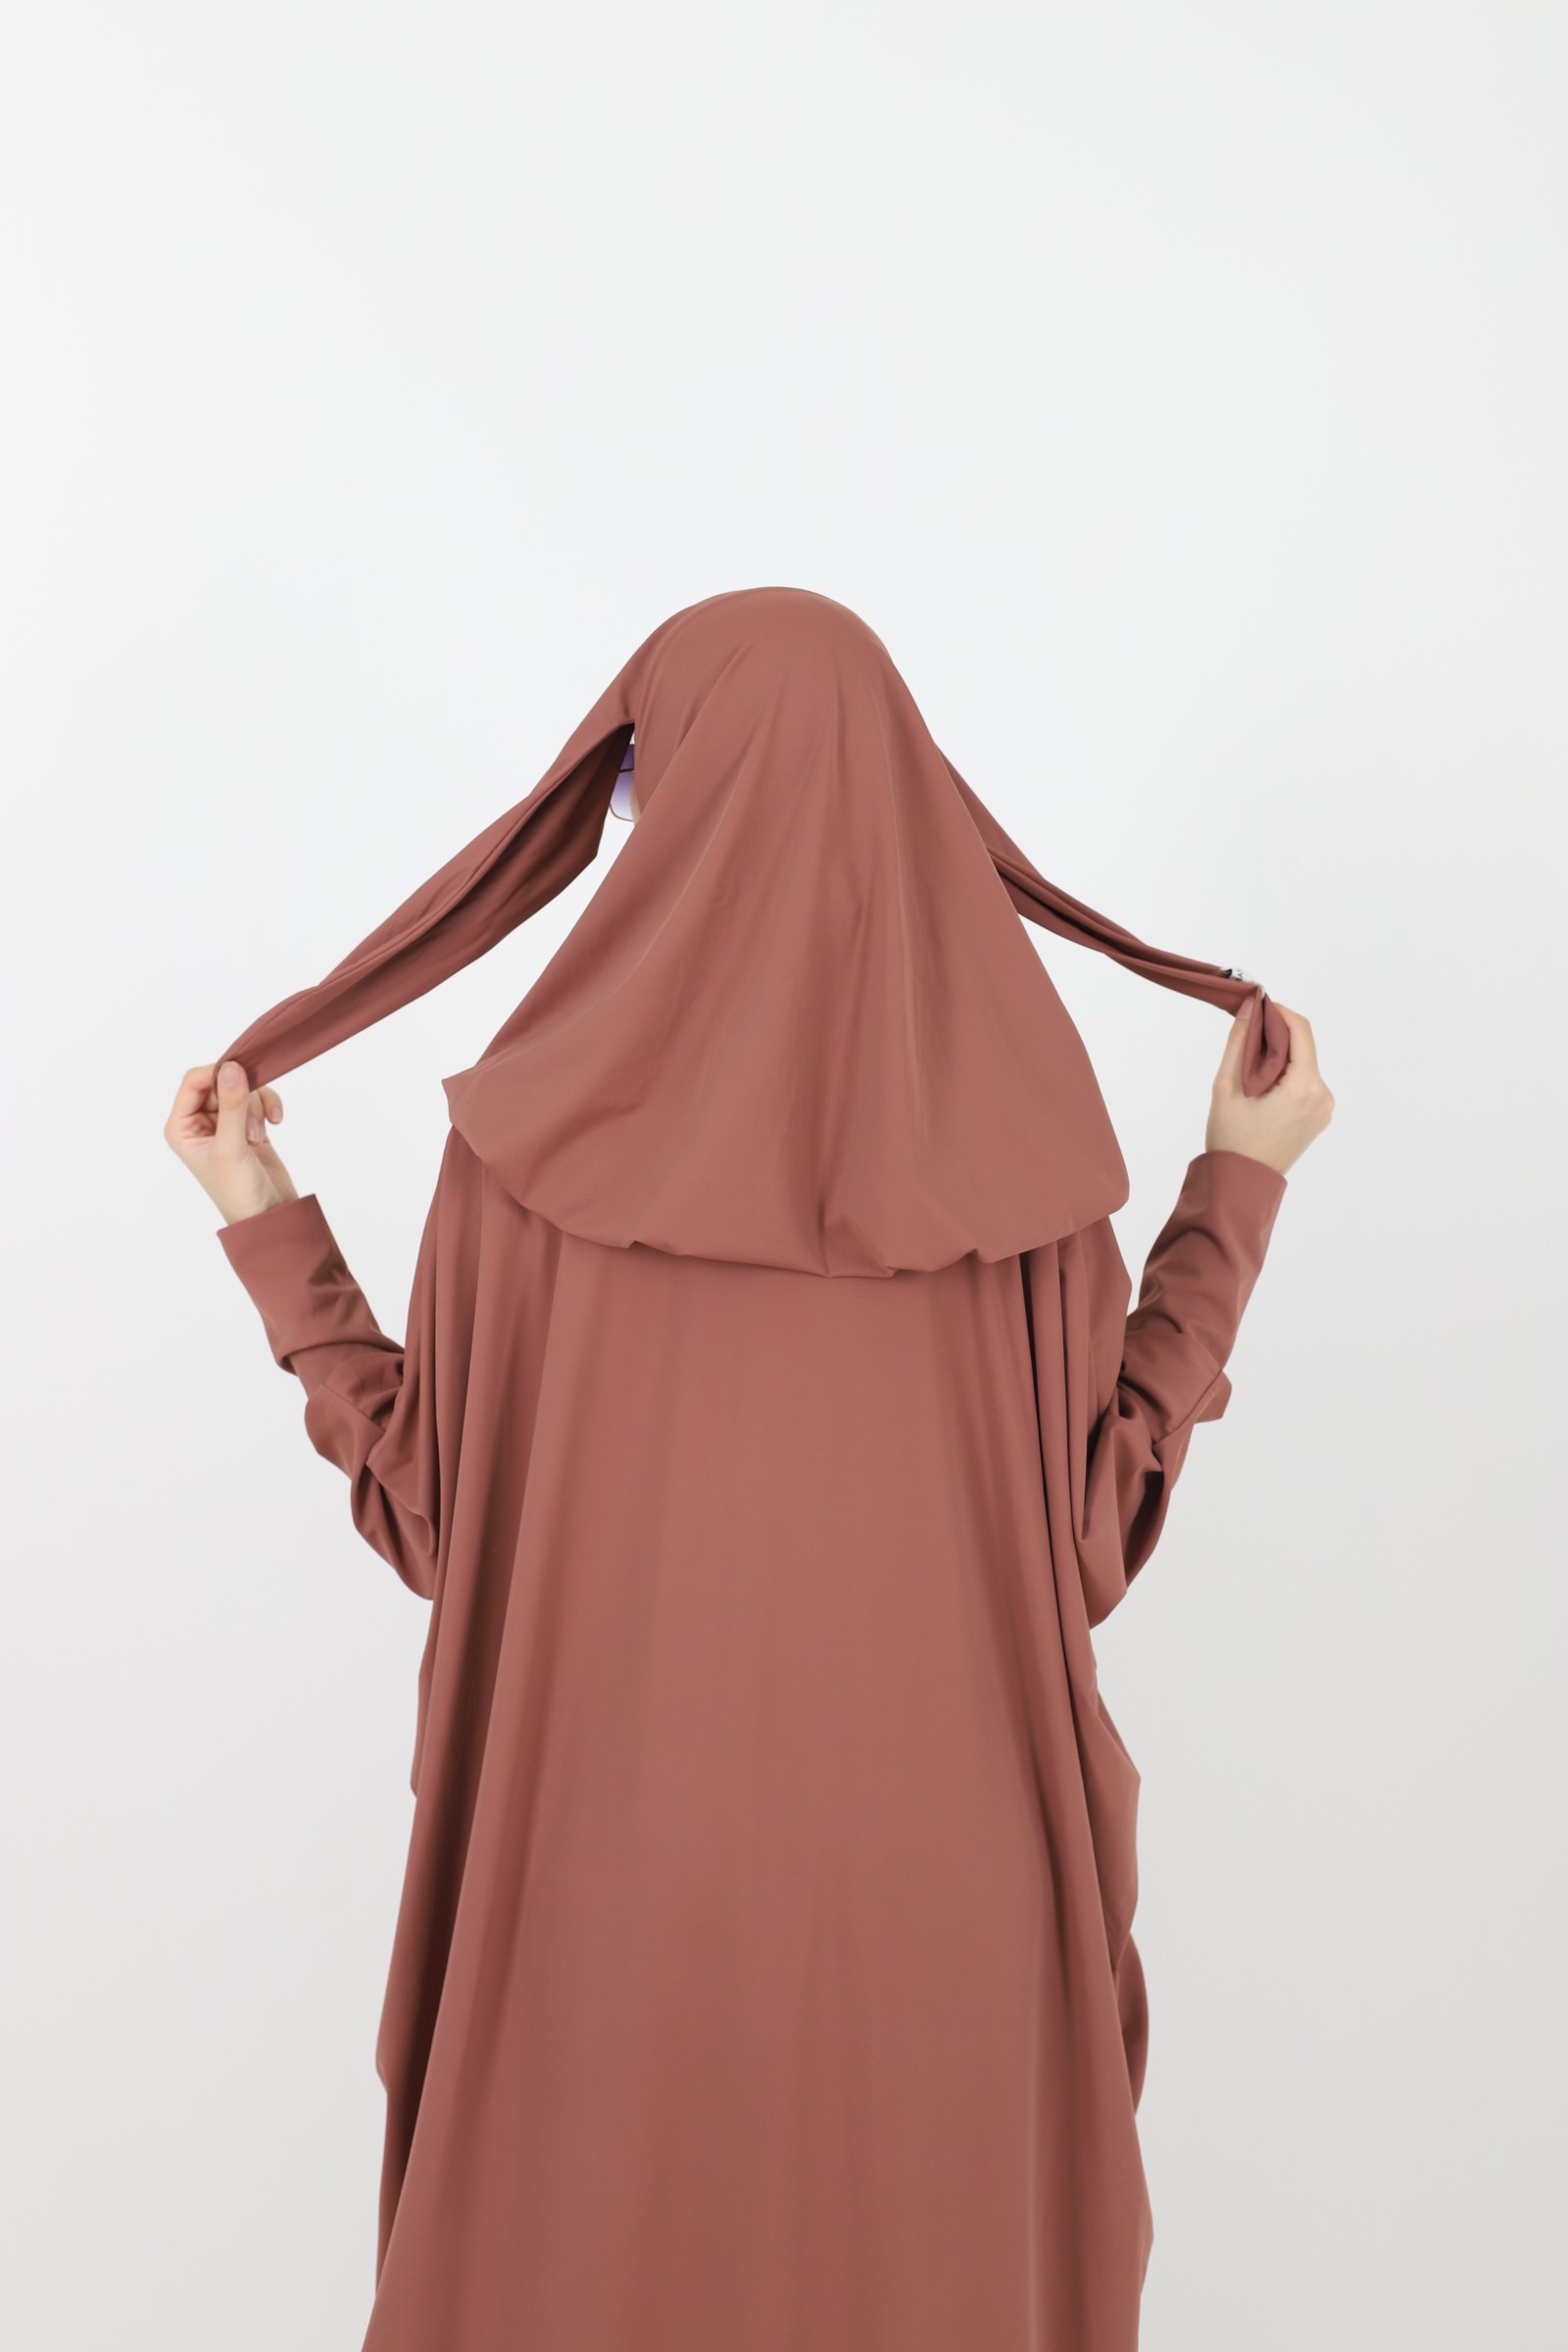 Jilbab de bain femme grande taille musulmane Burkini jilbab islamique